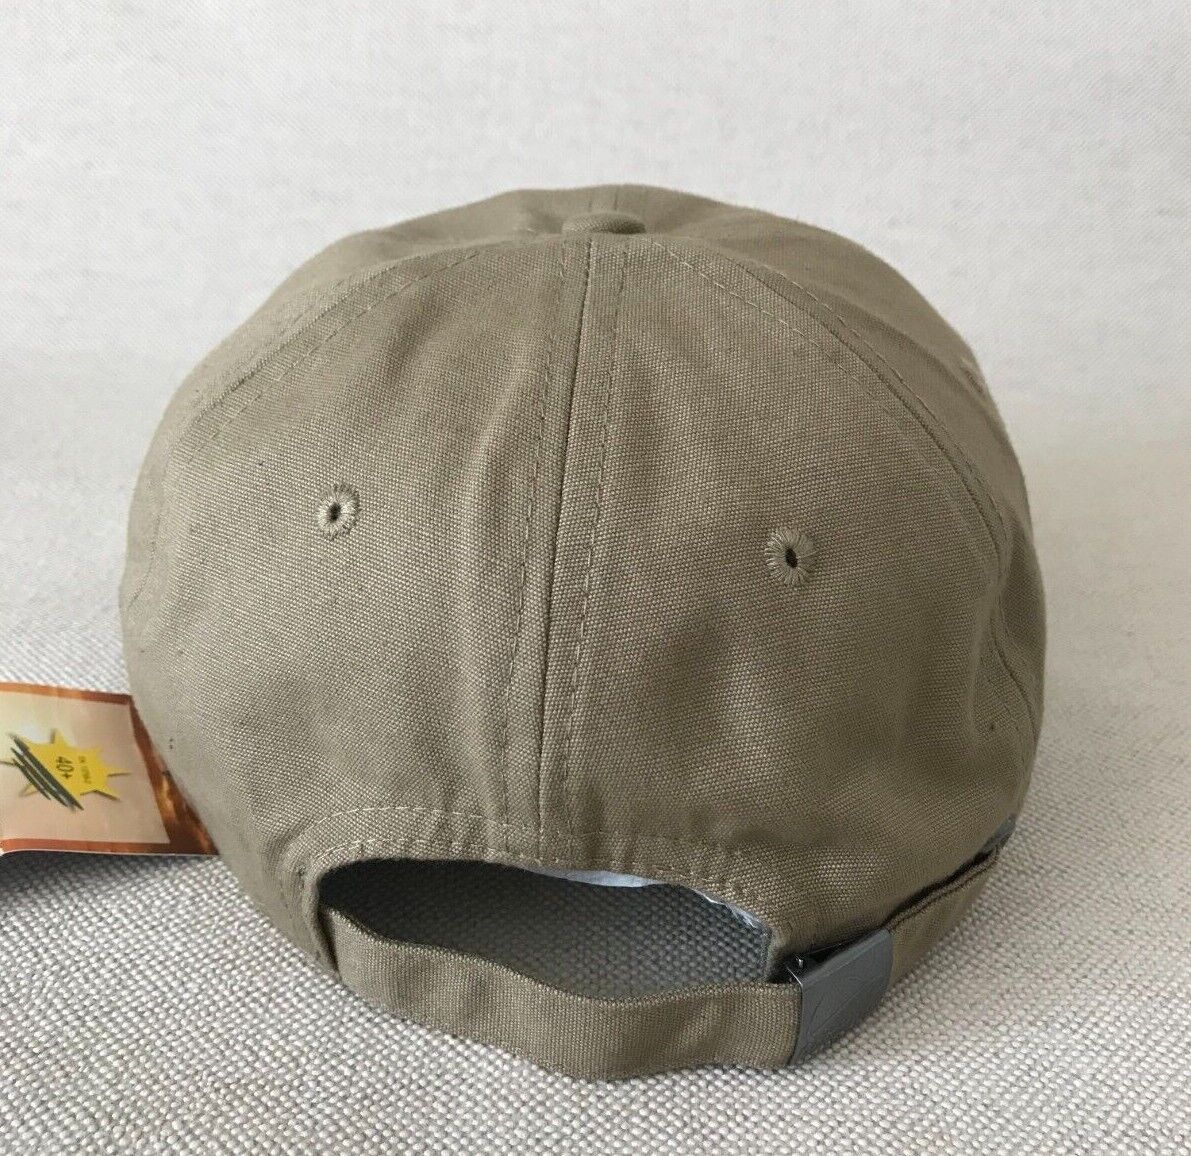 Göttmann Cannes UV Protection Cotton Basecap Cap Umbrella Hat | eBay